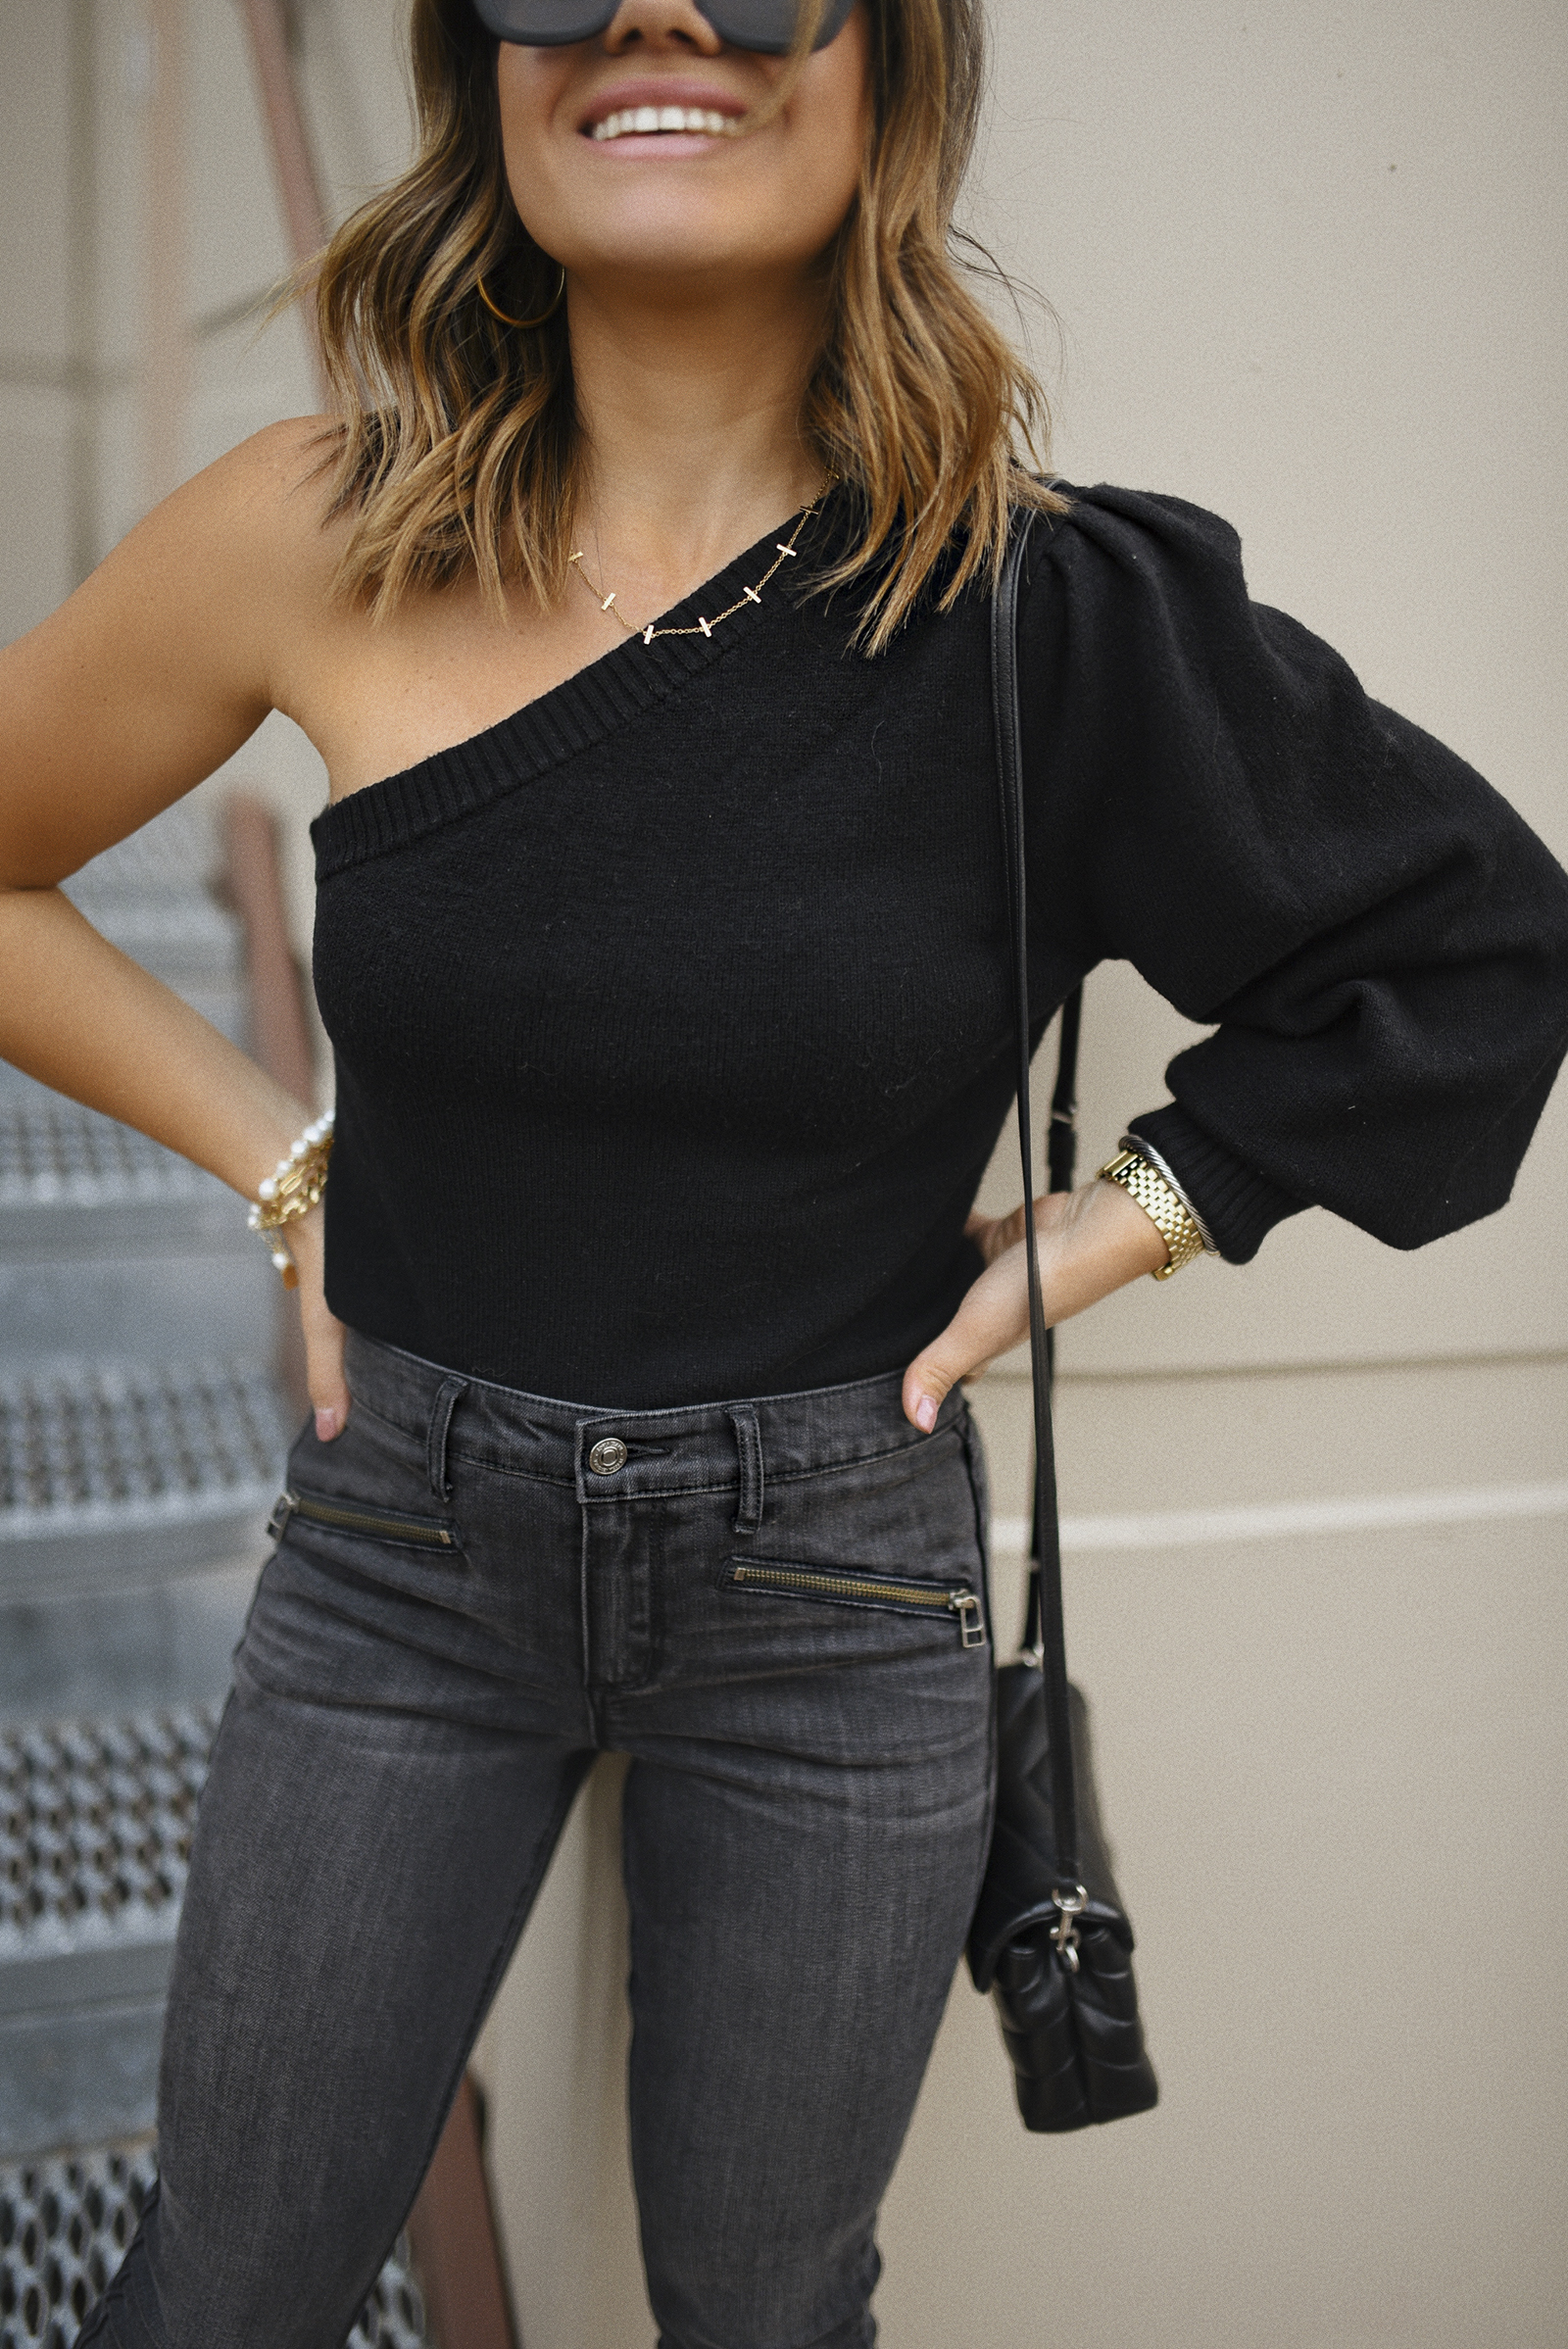 Carolina Hellal of Chic Talk wearing Sofia Jeans holiday collection via Walmart. 